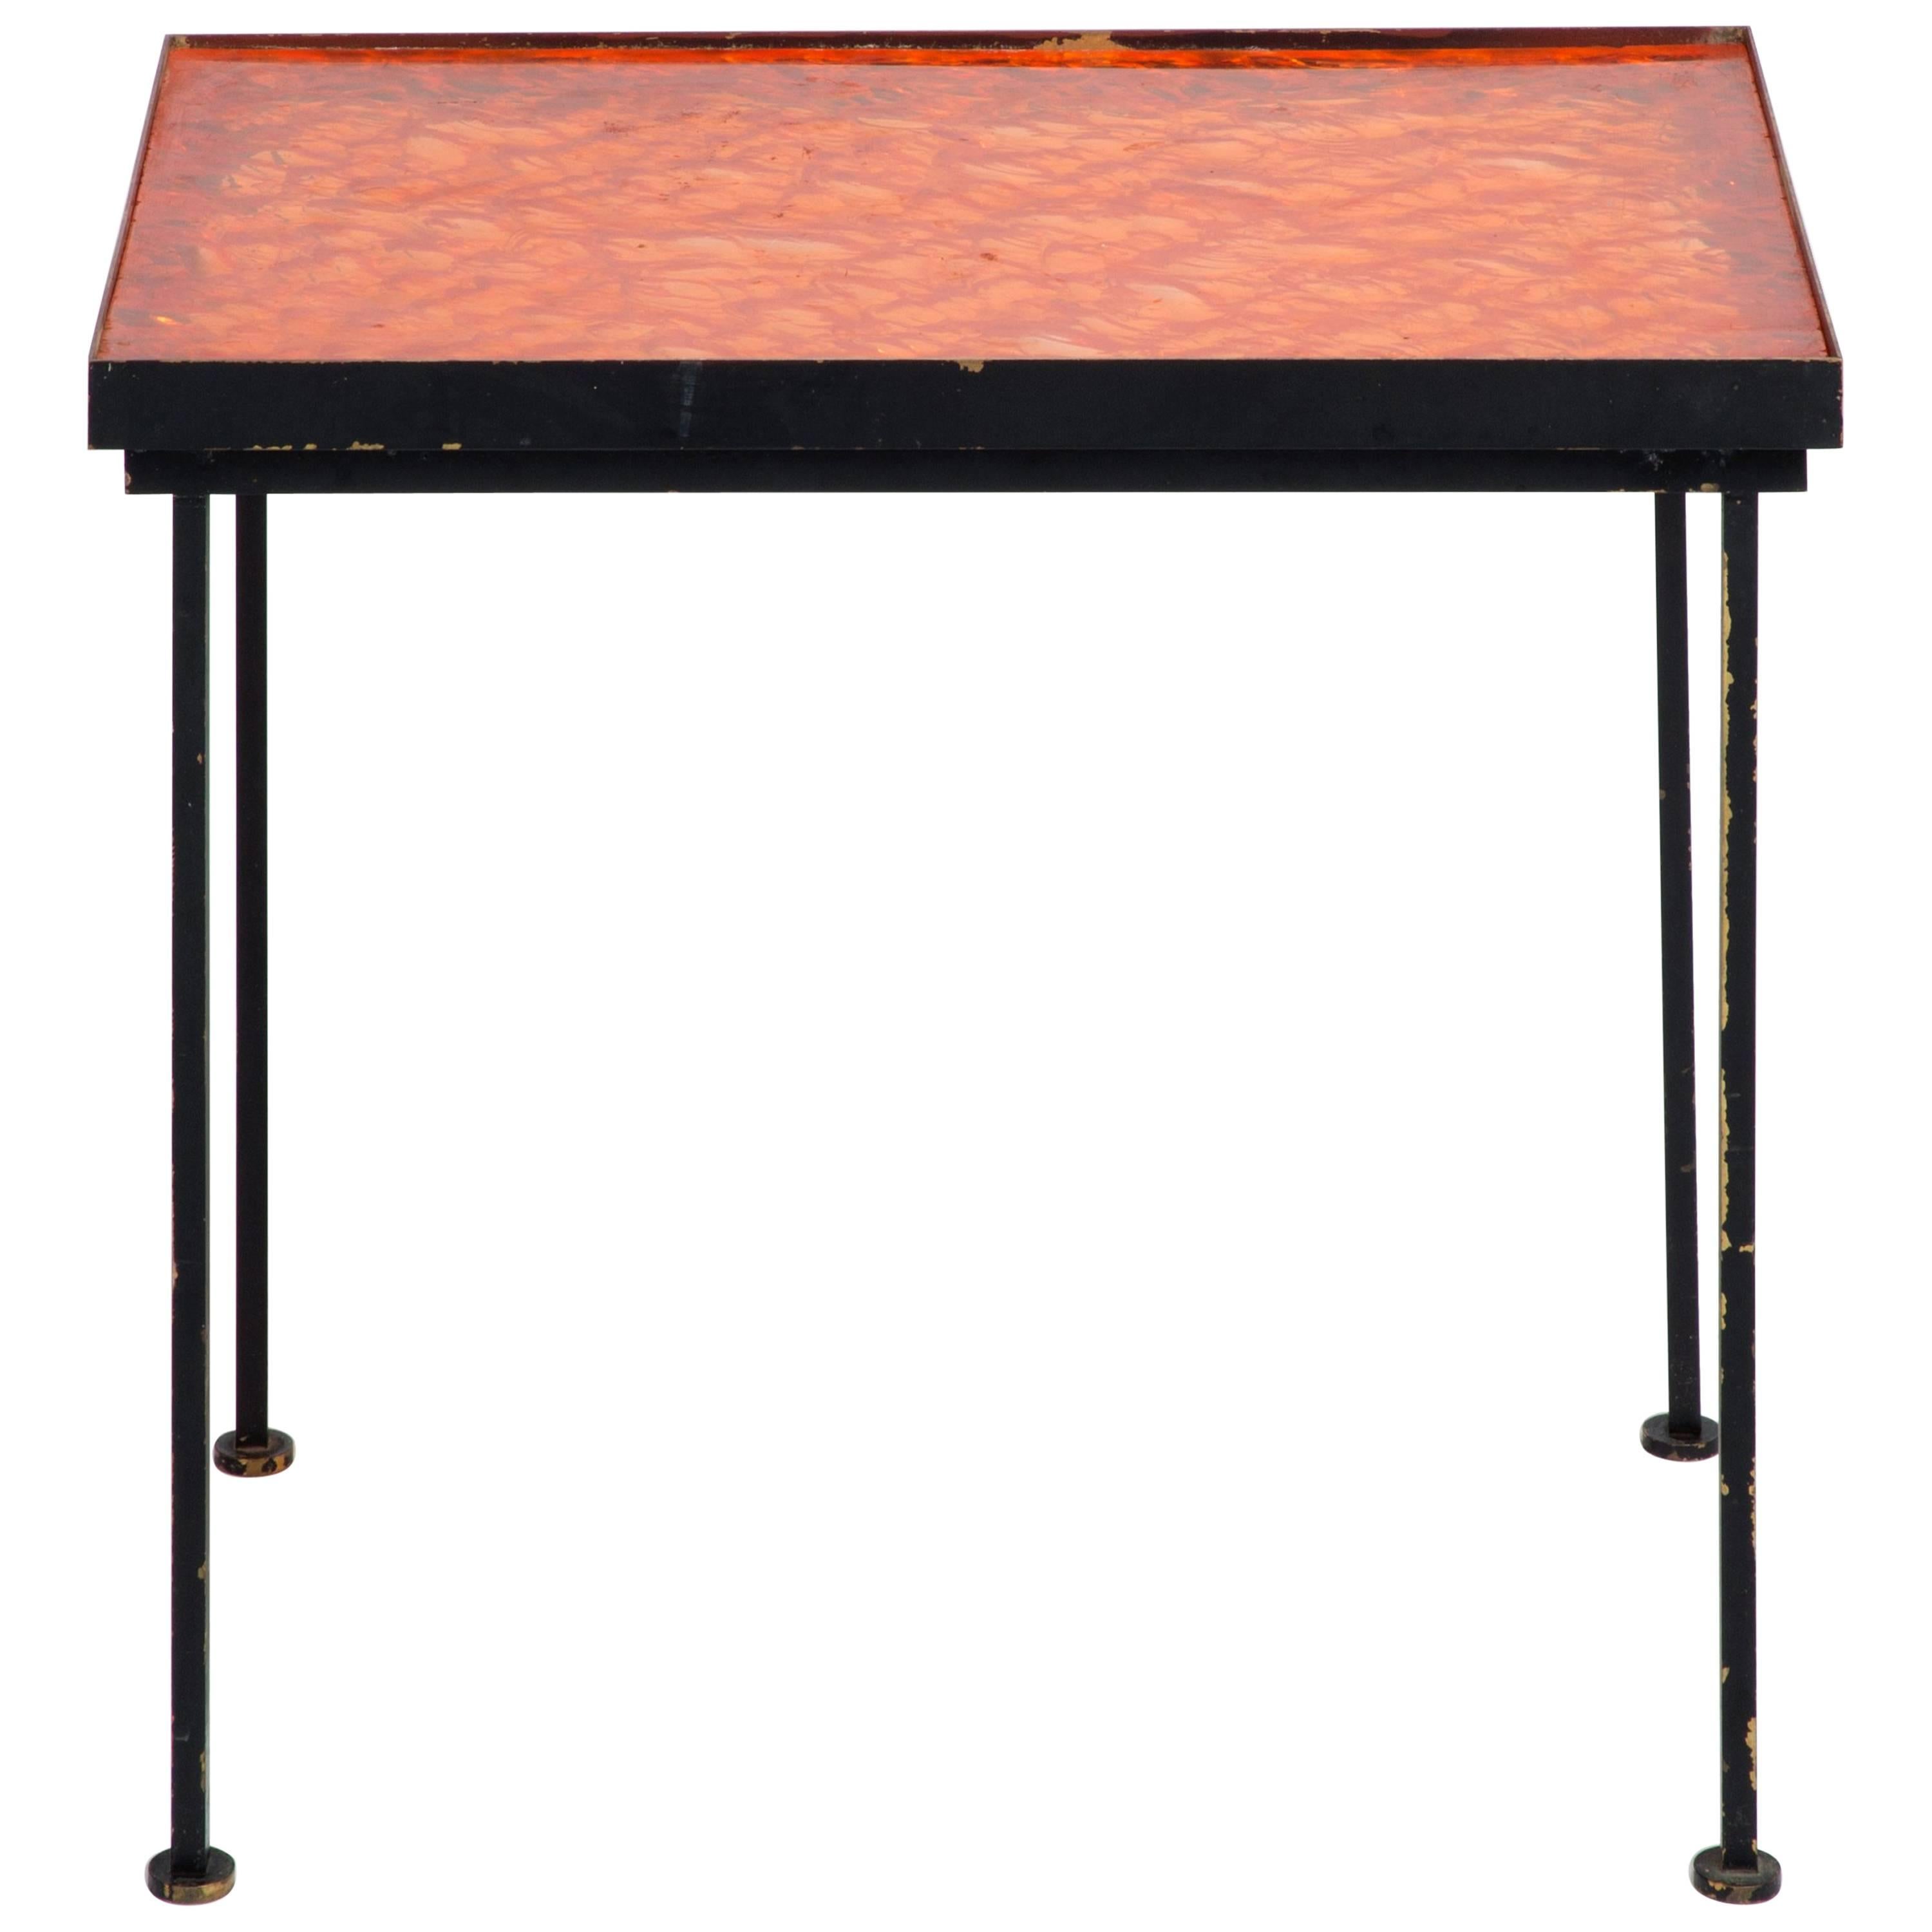 Orange Resin Top and Metal Side Table